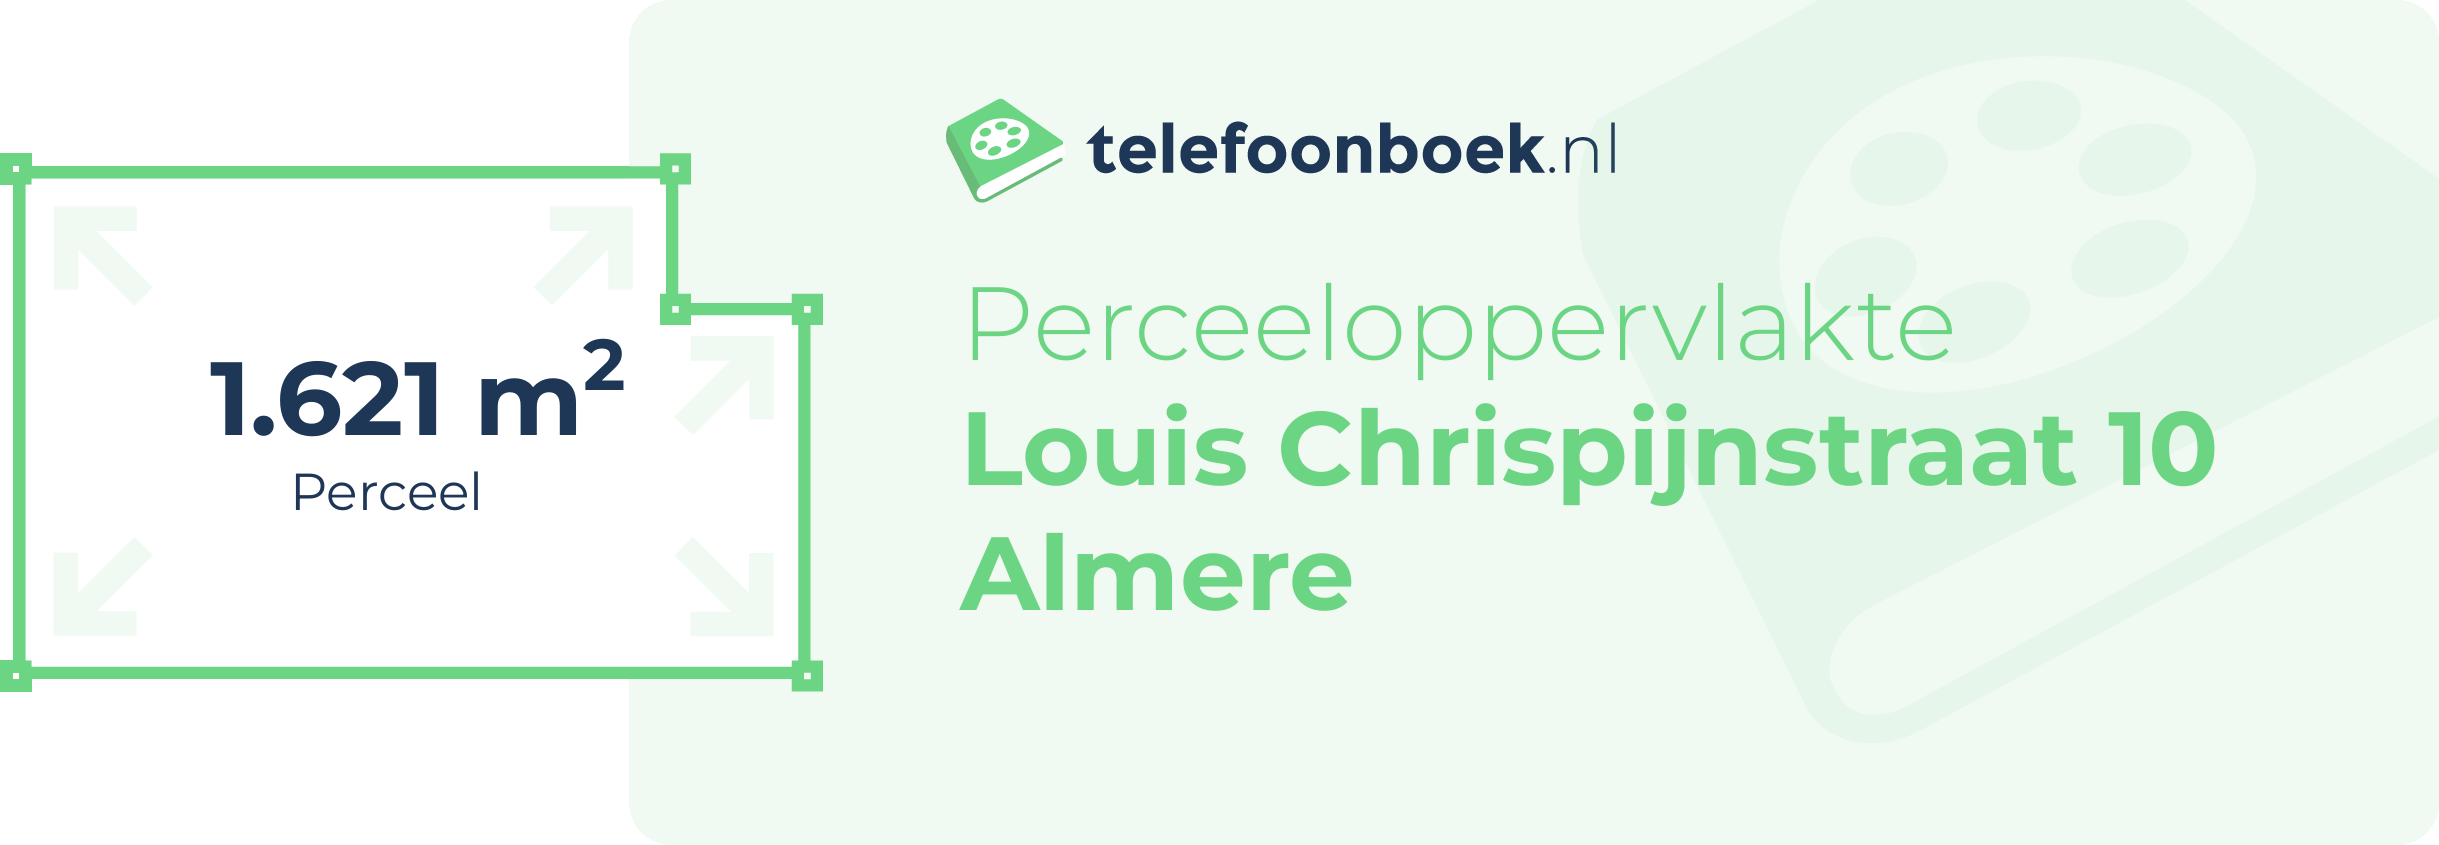 Perceeloppervlakte Louis Chrispijnstraat 10 Almere